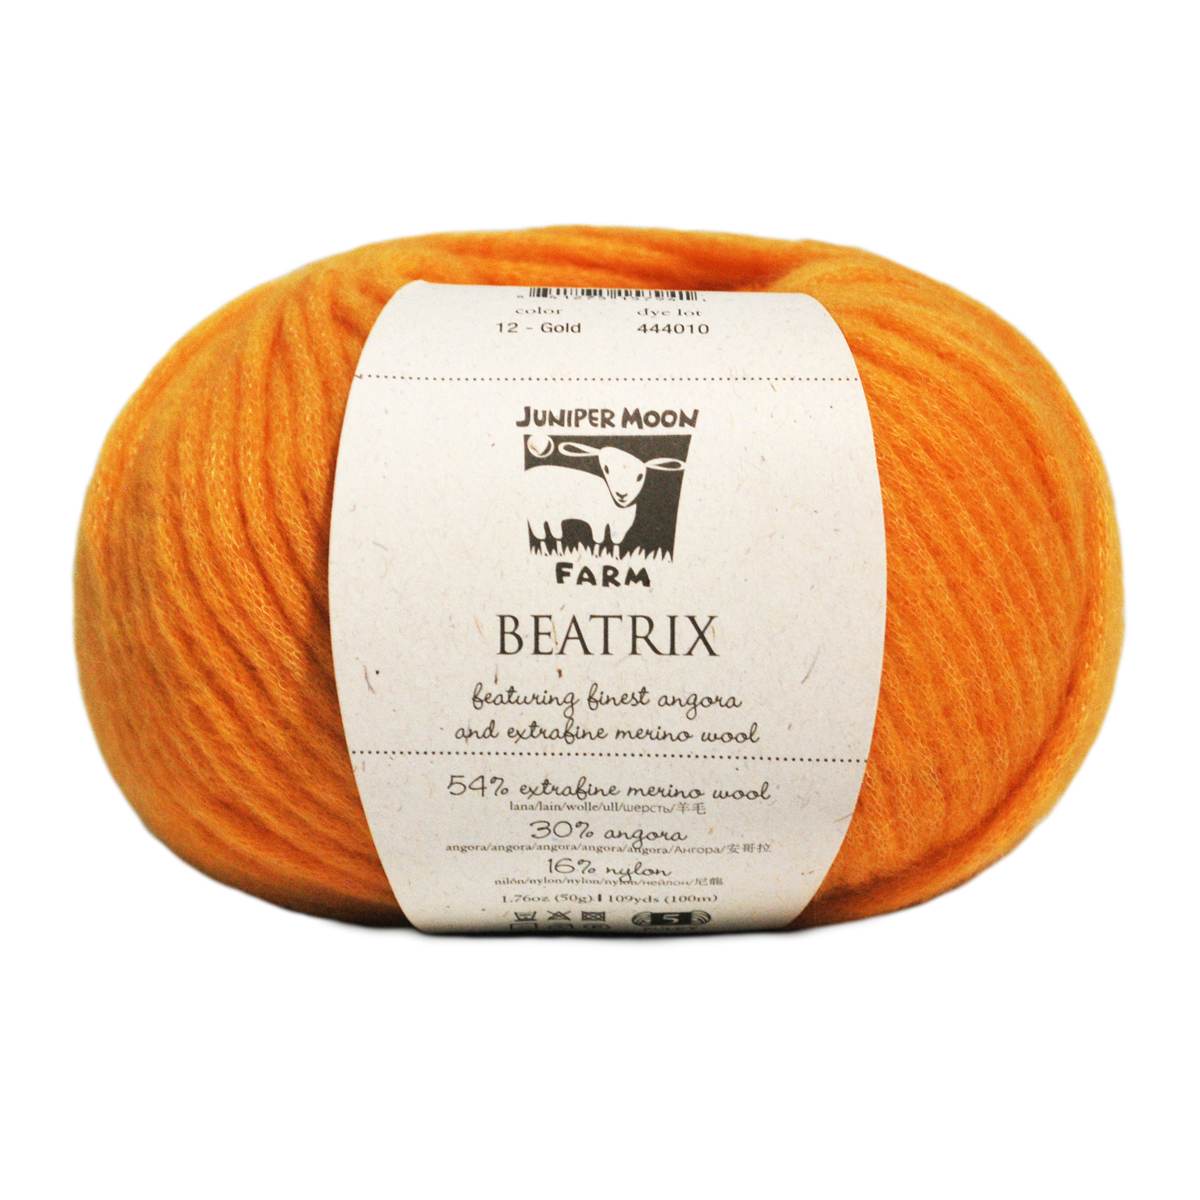 Extrafine Merino Wool and Angora Yarn by Juniper Moon Farm - Beatrix